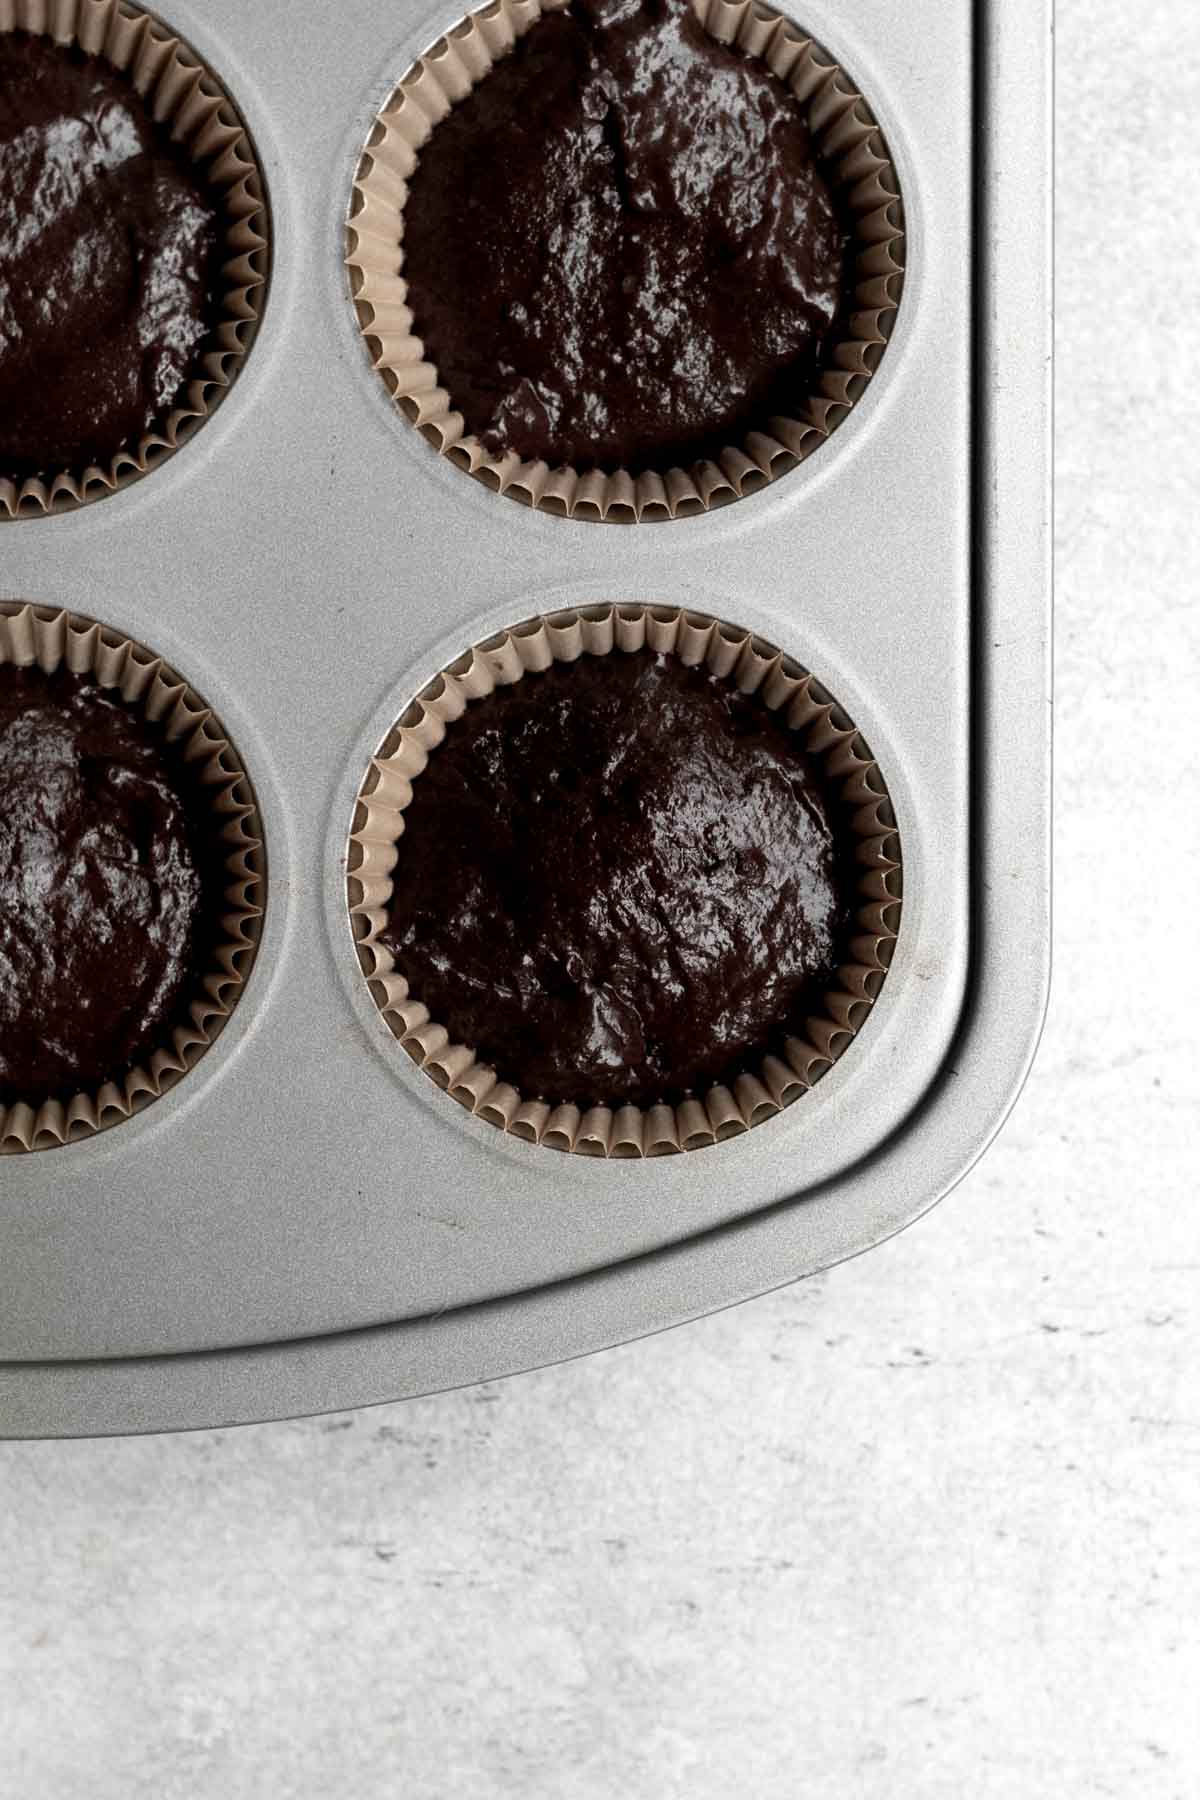 Putting the chocolate batter into a cupcake tin.